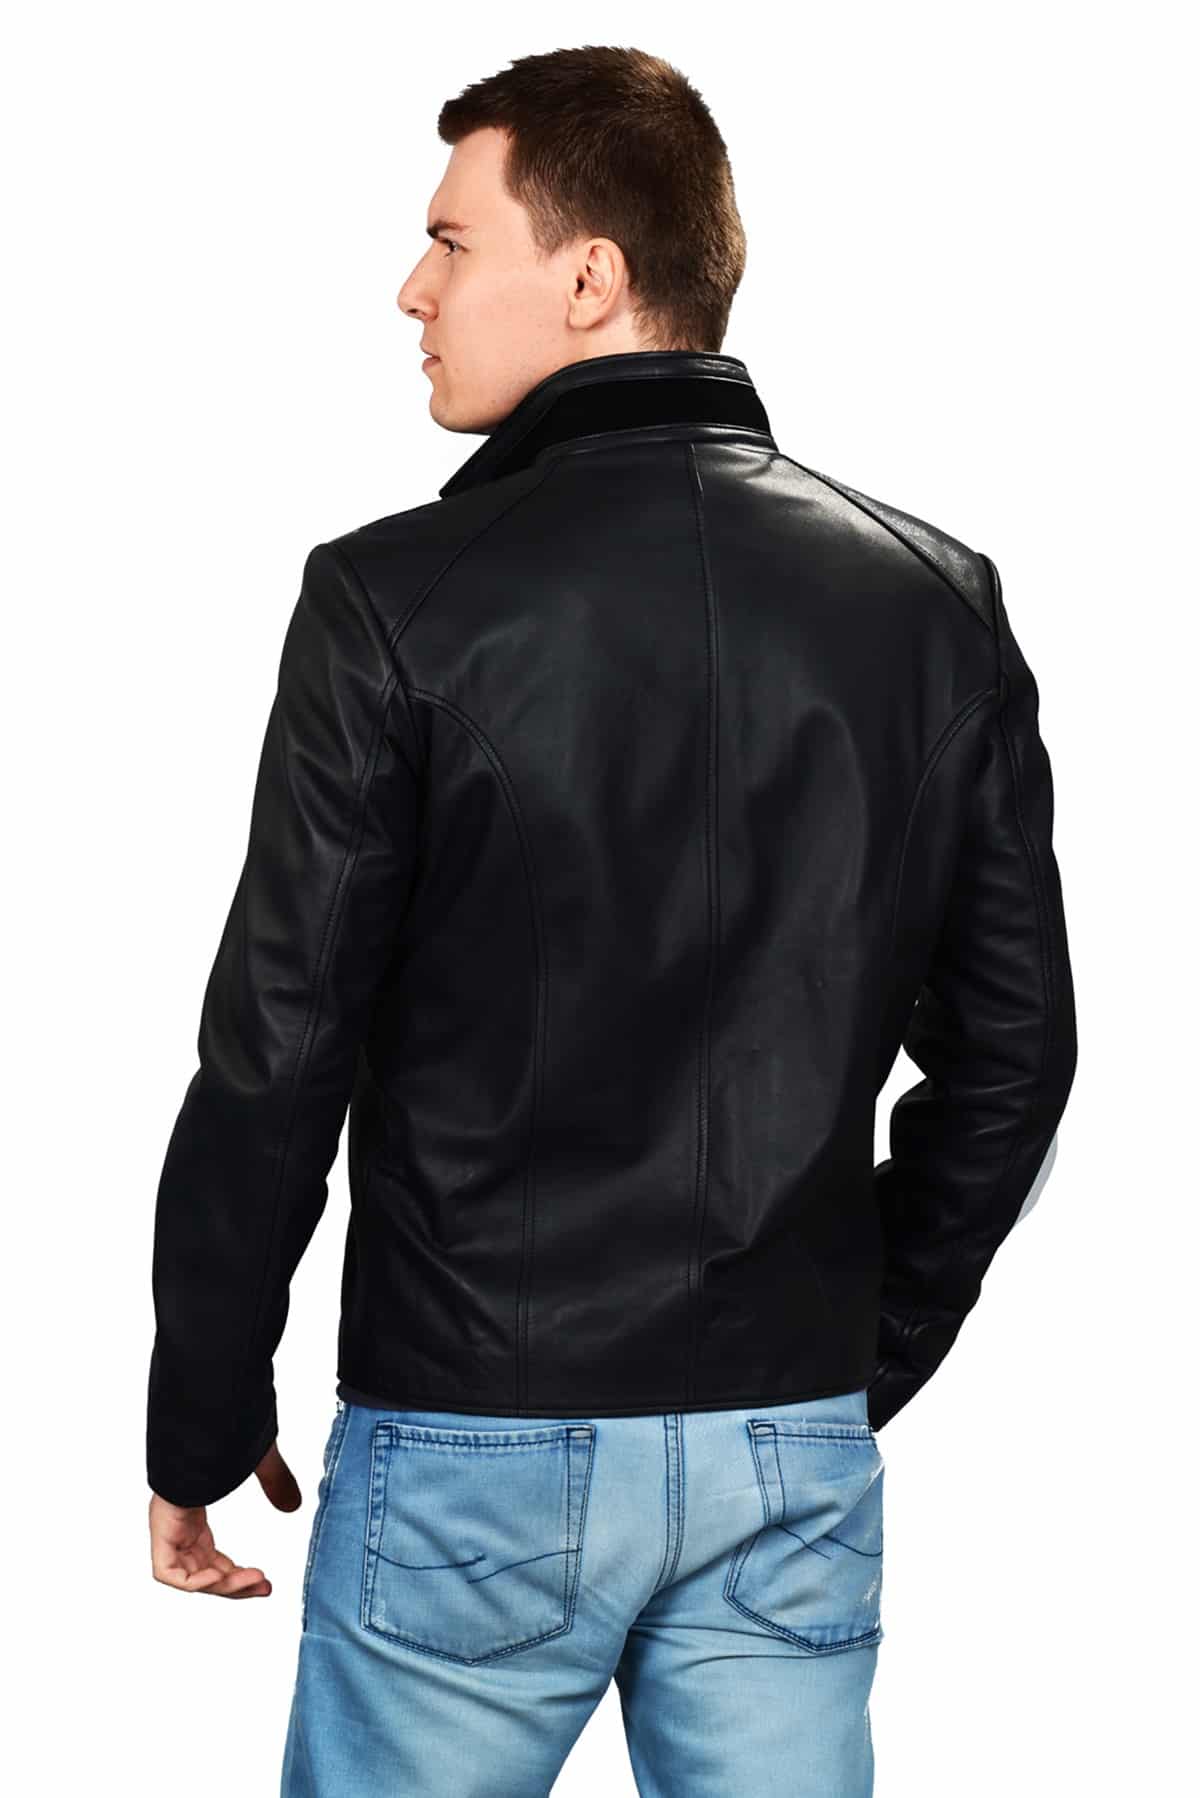 Tirano Cult Men’s Classic Black Leather Jacket – UFS